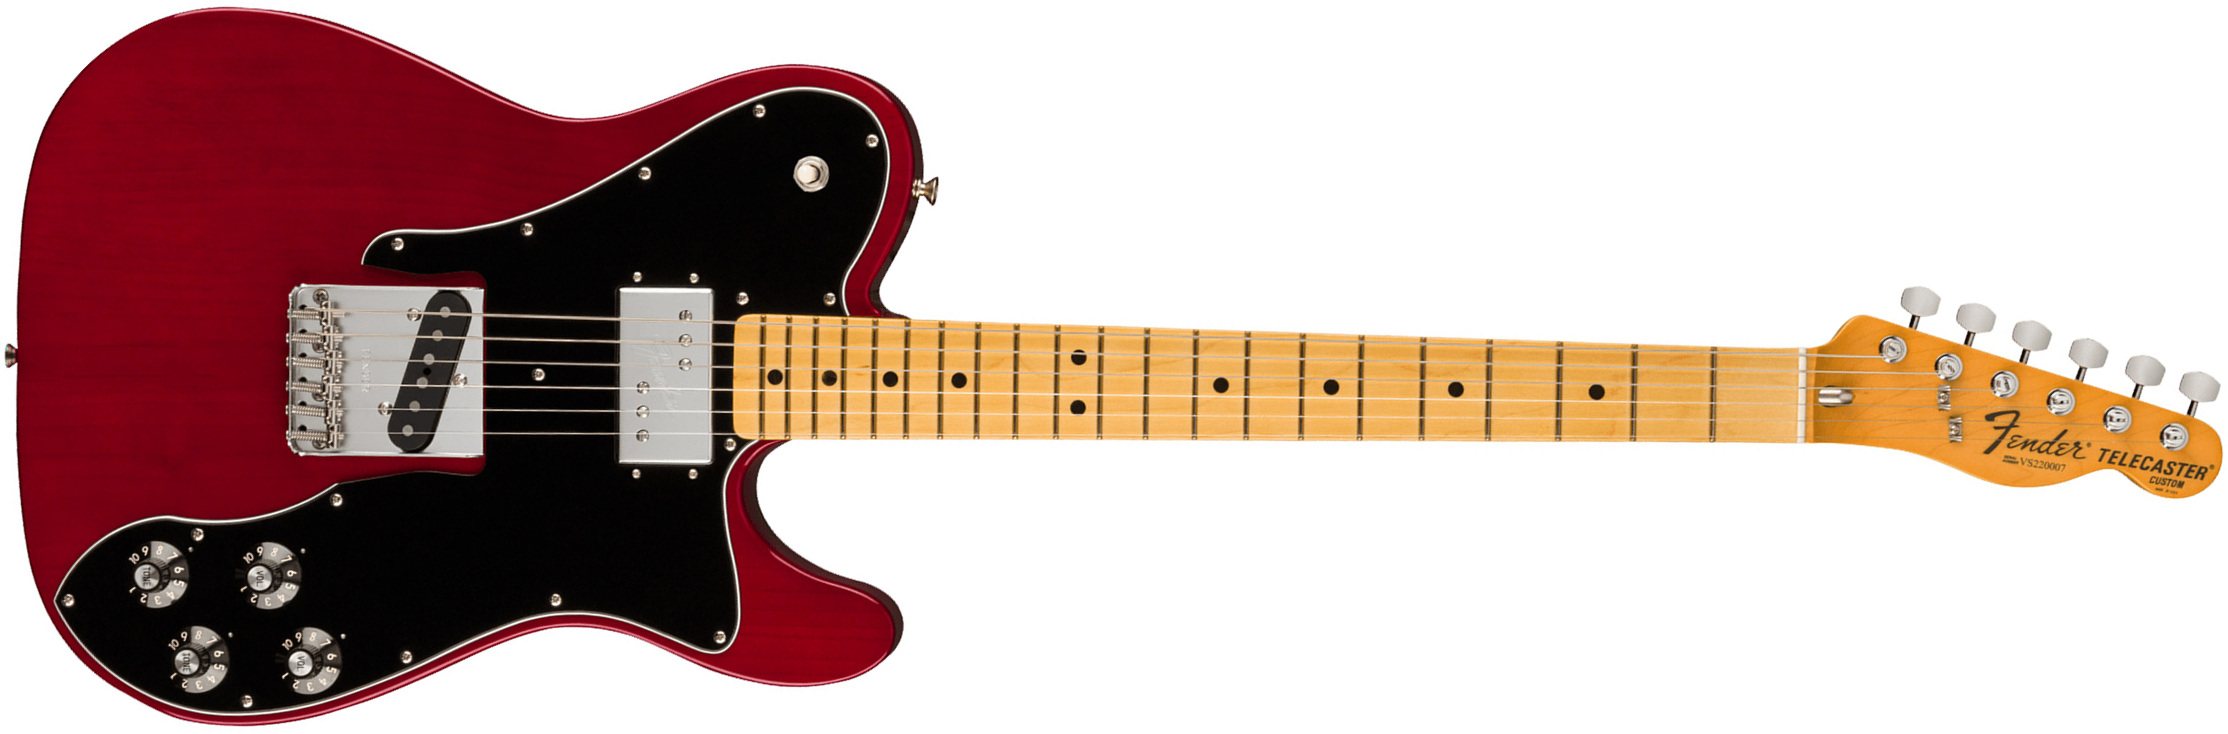 Fender Tele Custom 1977 American Vintage Ii Usa Sh Ht Mn - Wine - Televorm elektrische gitaar - Main picture